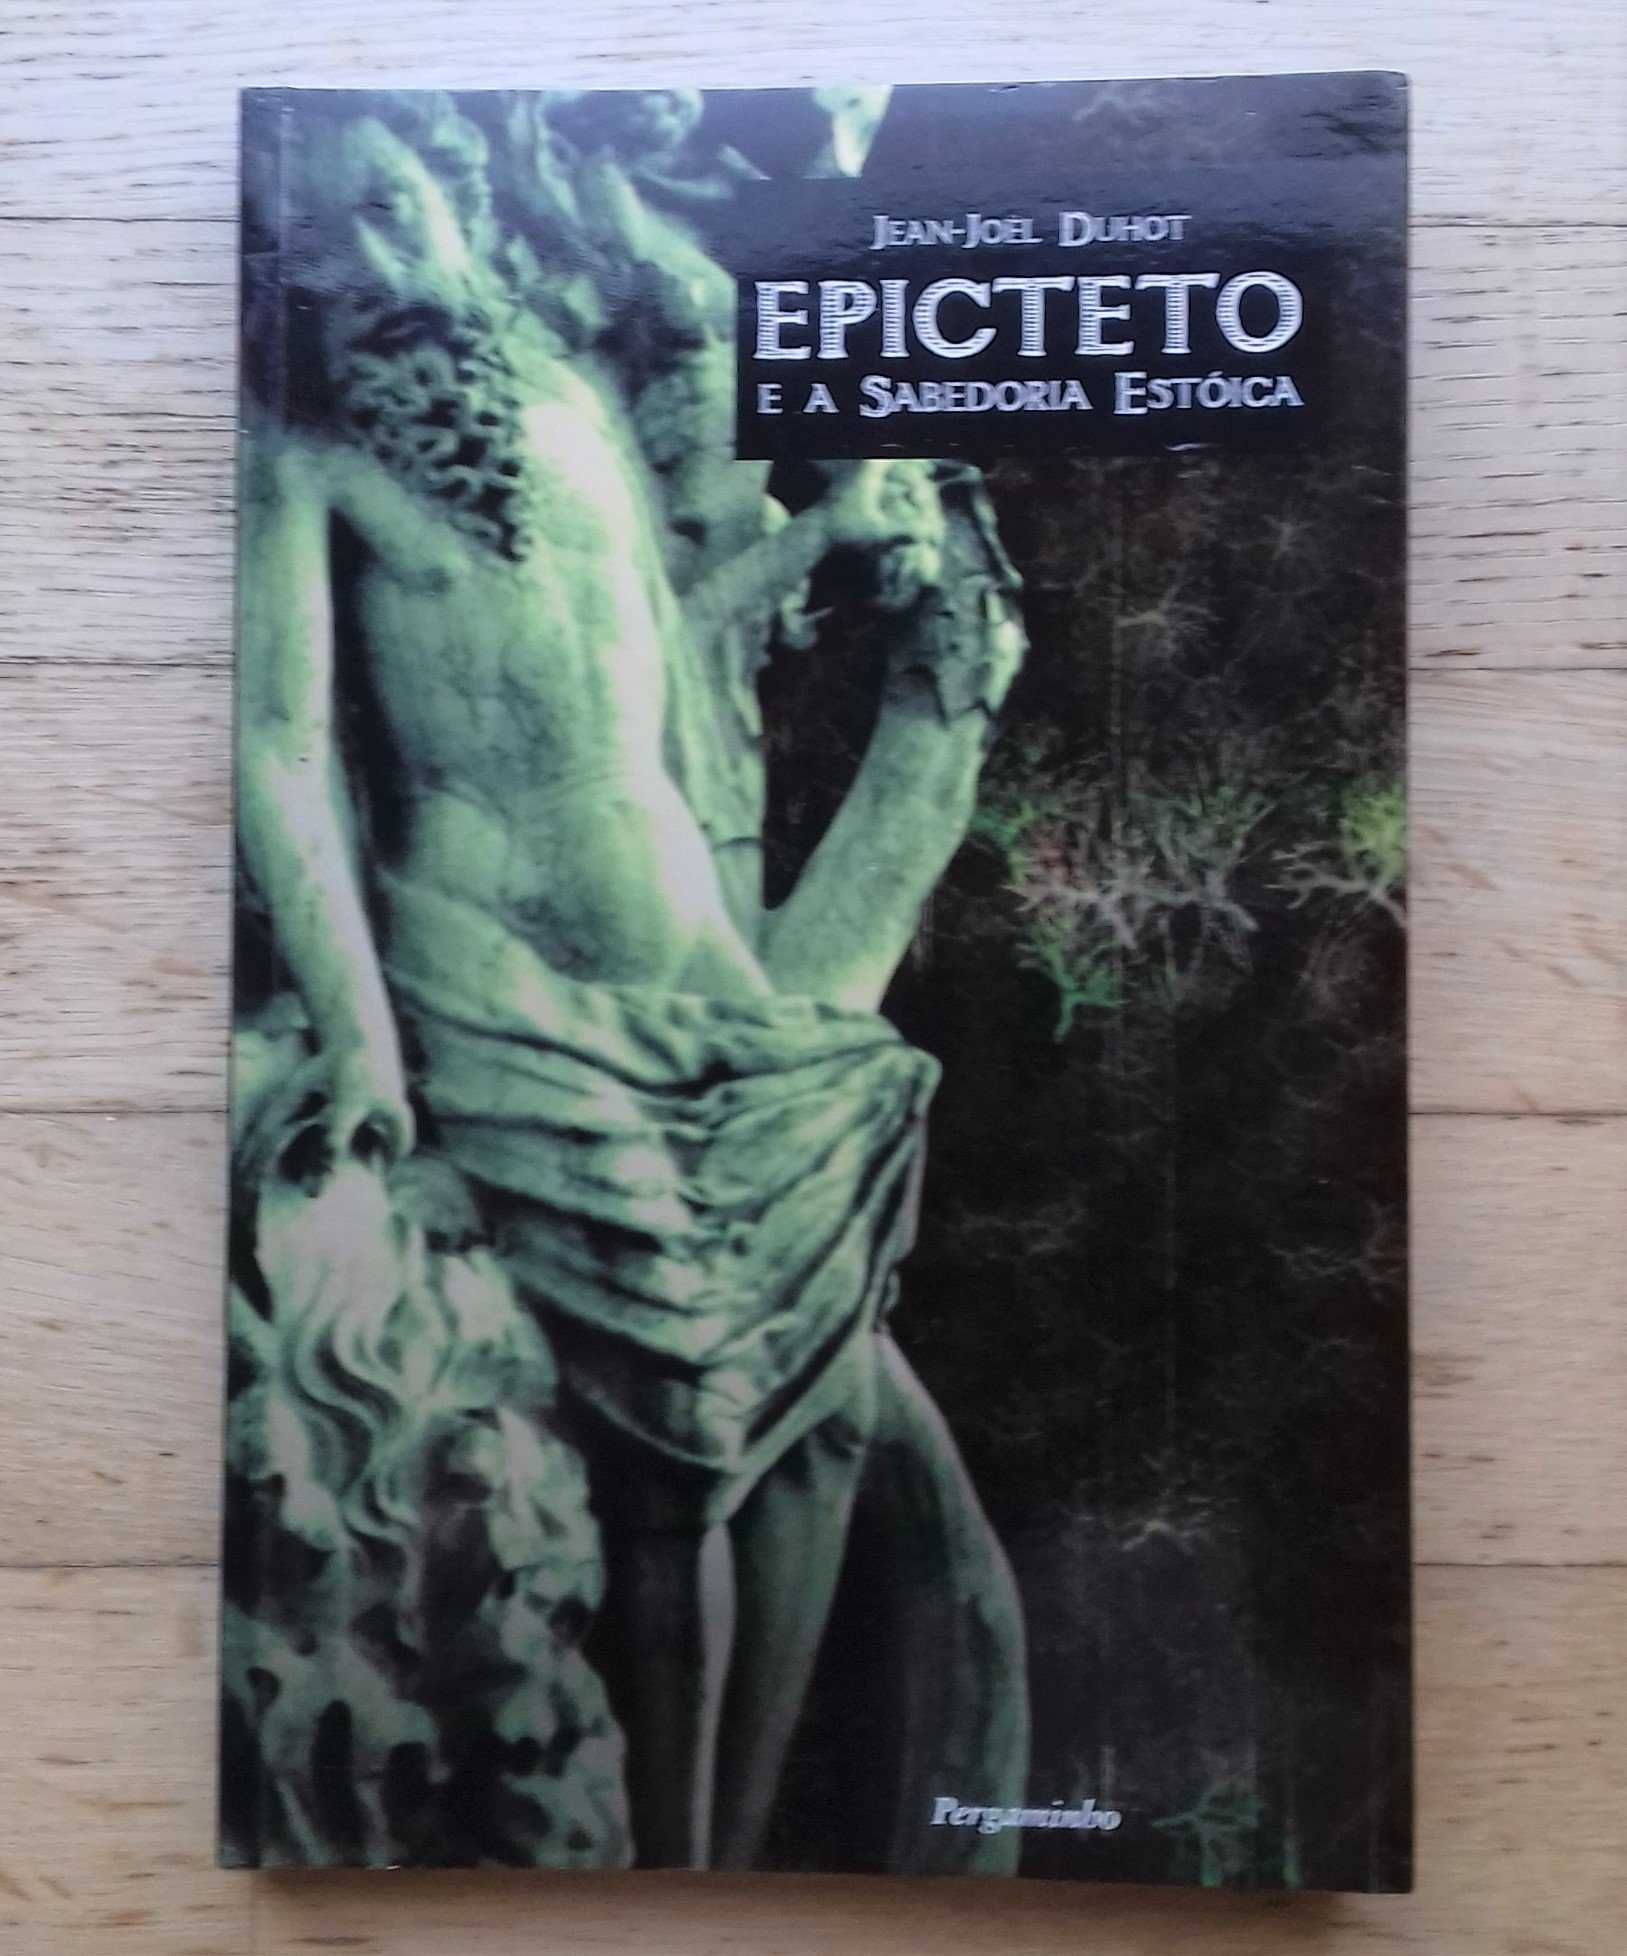 Epicteto e a Sabedoria Estóica, de Jean-Joel Duhot